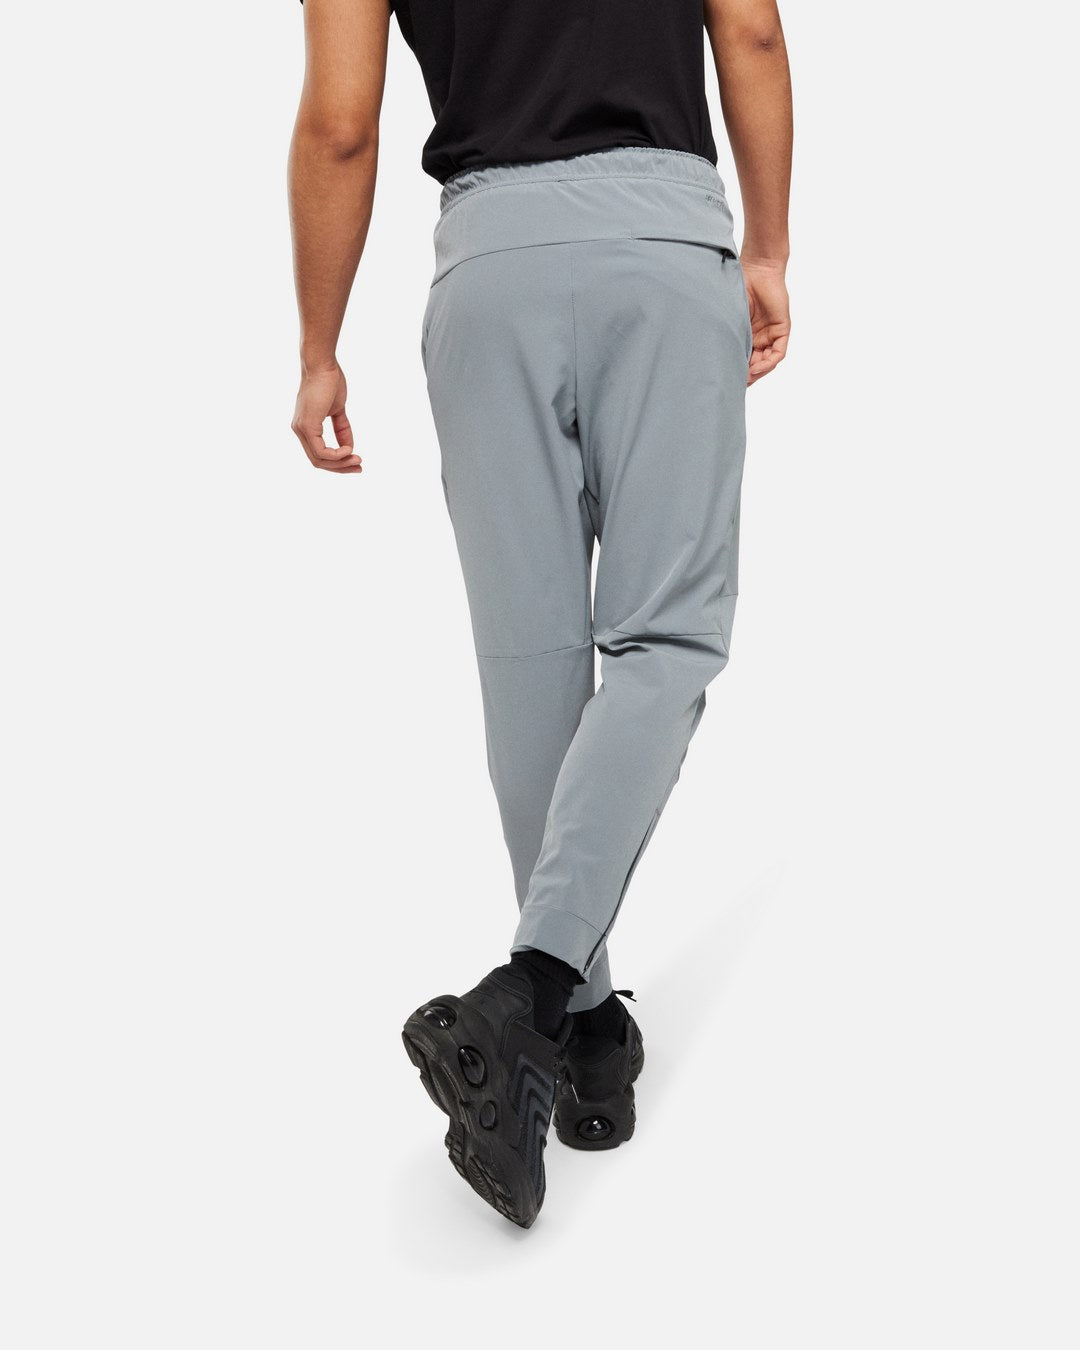 Pantalon jogging Nike Unlimited - Gris